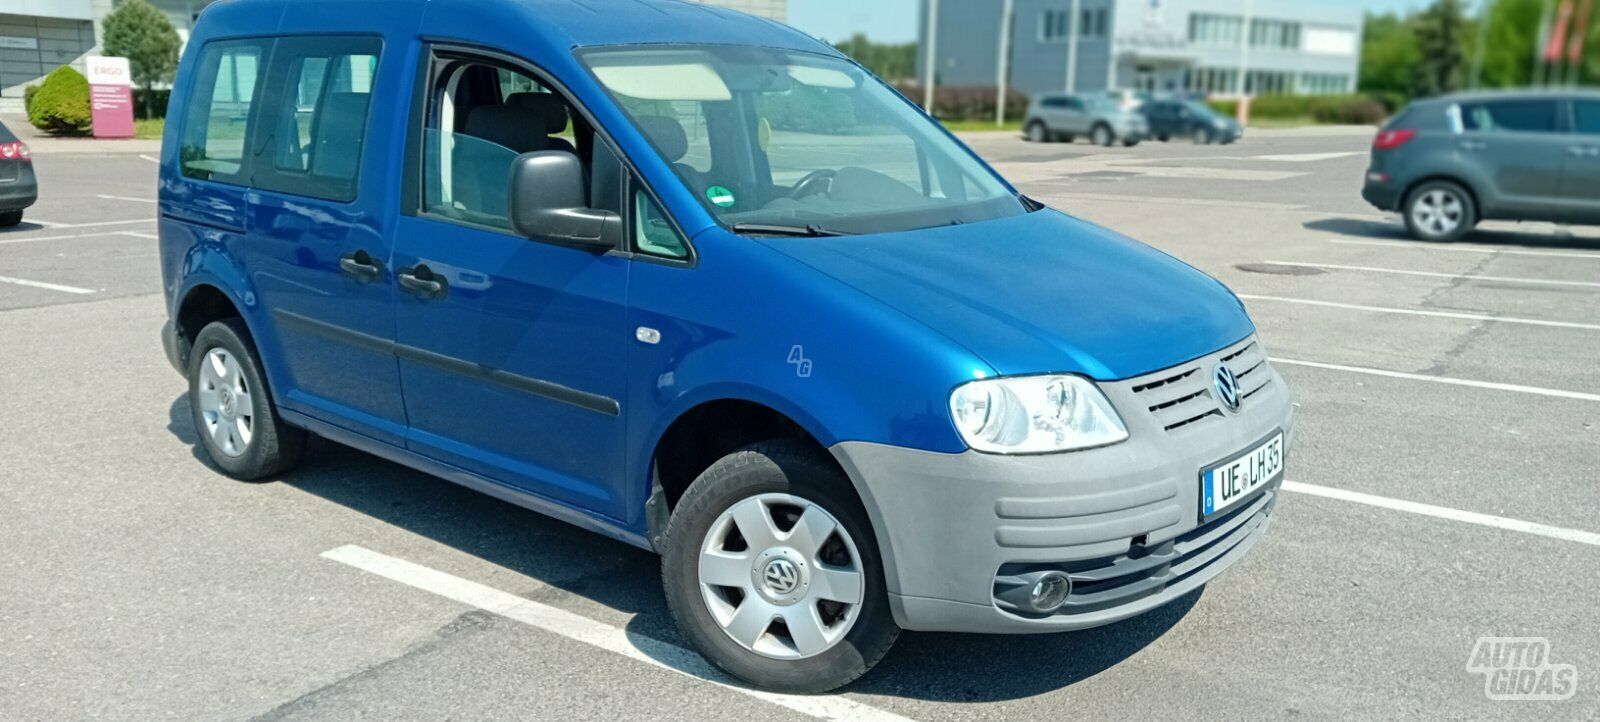 Volkswagen Caddy TECH IKI 2026-06 2006 г